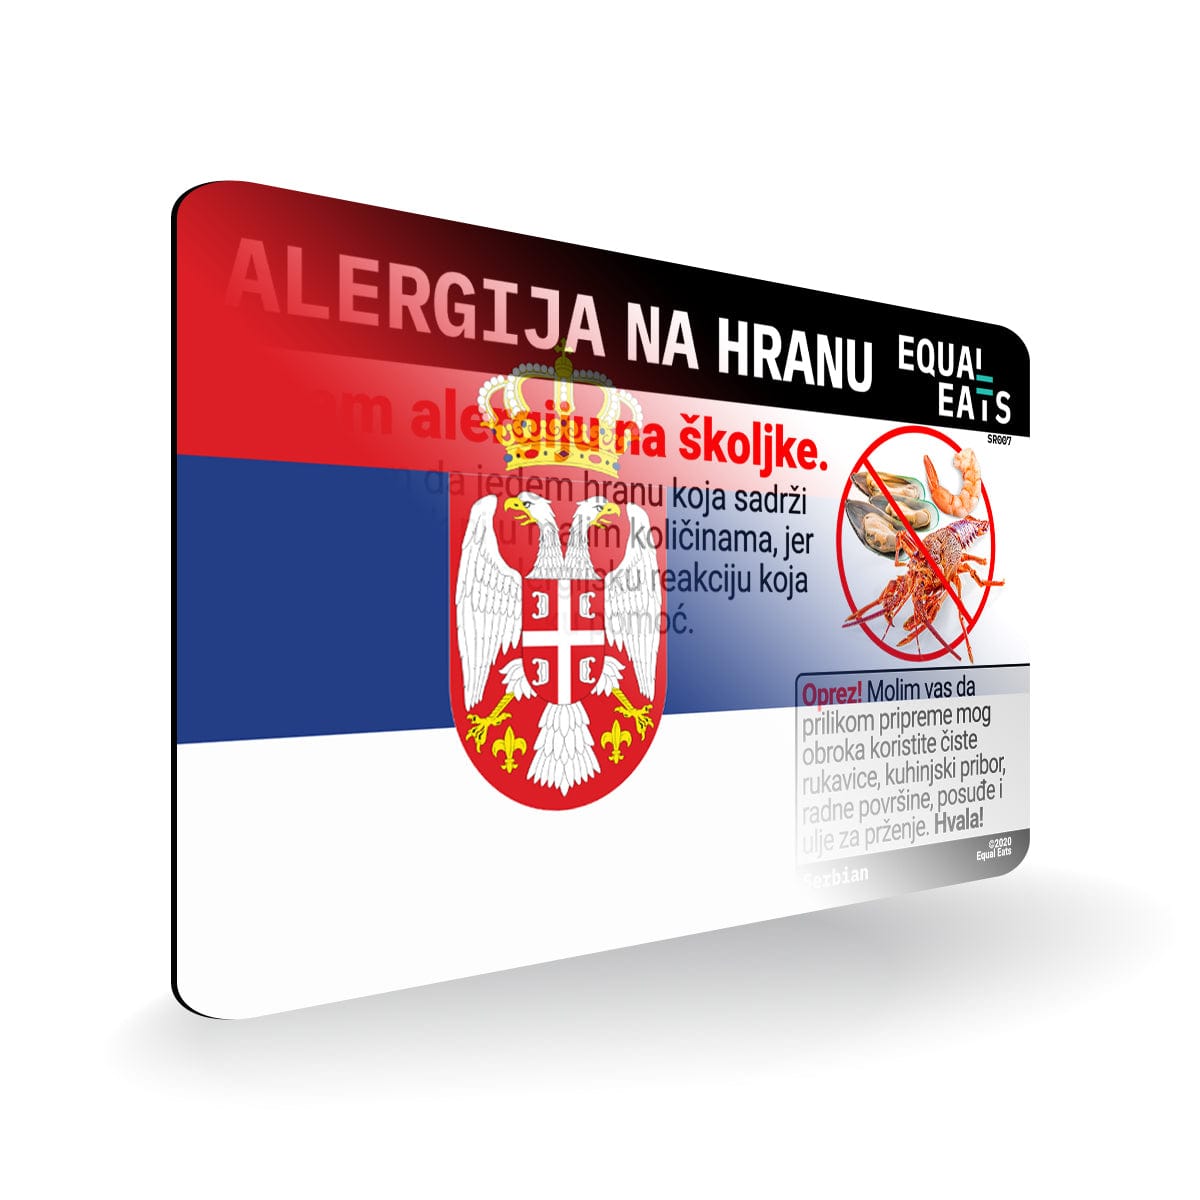 Shellfish Allergy in Serbian. Shellfish Allergy Card for Serbia